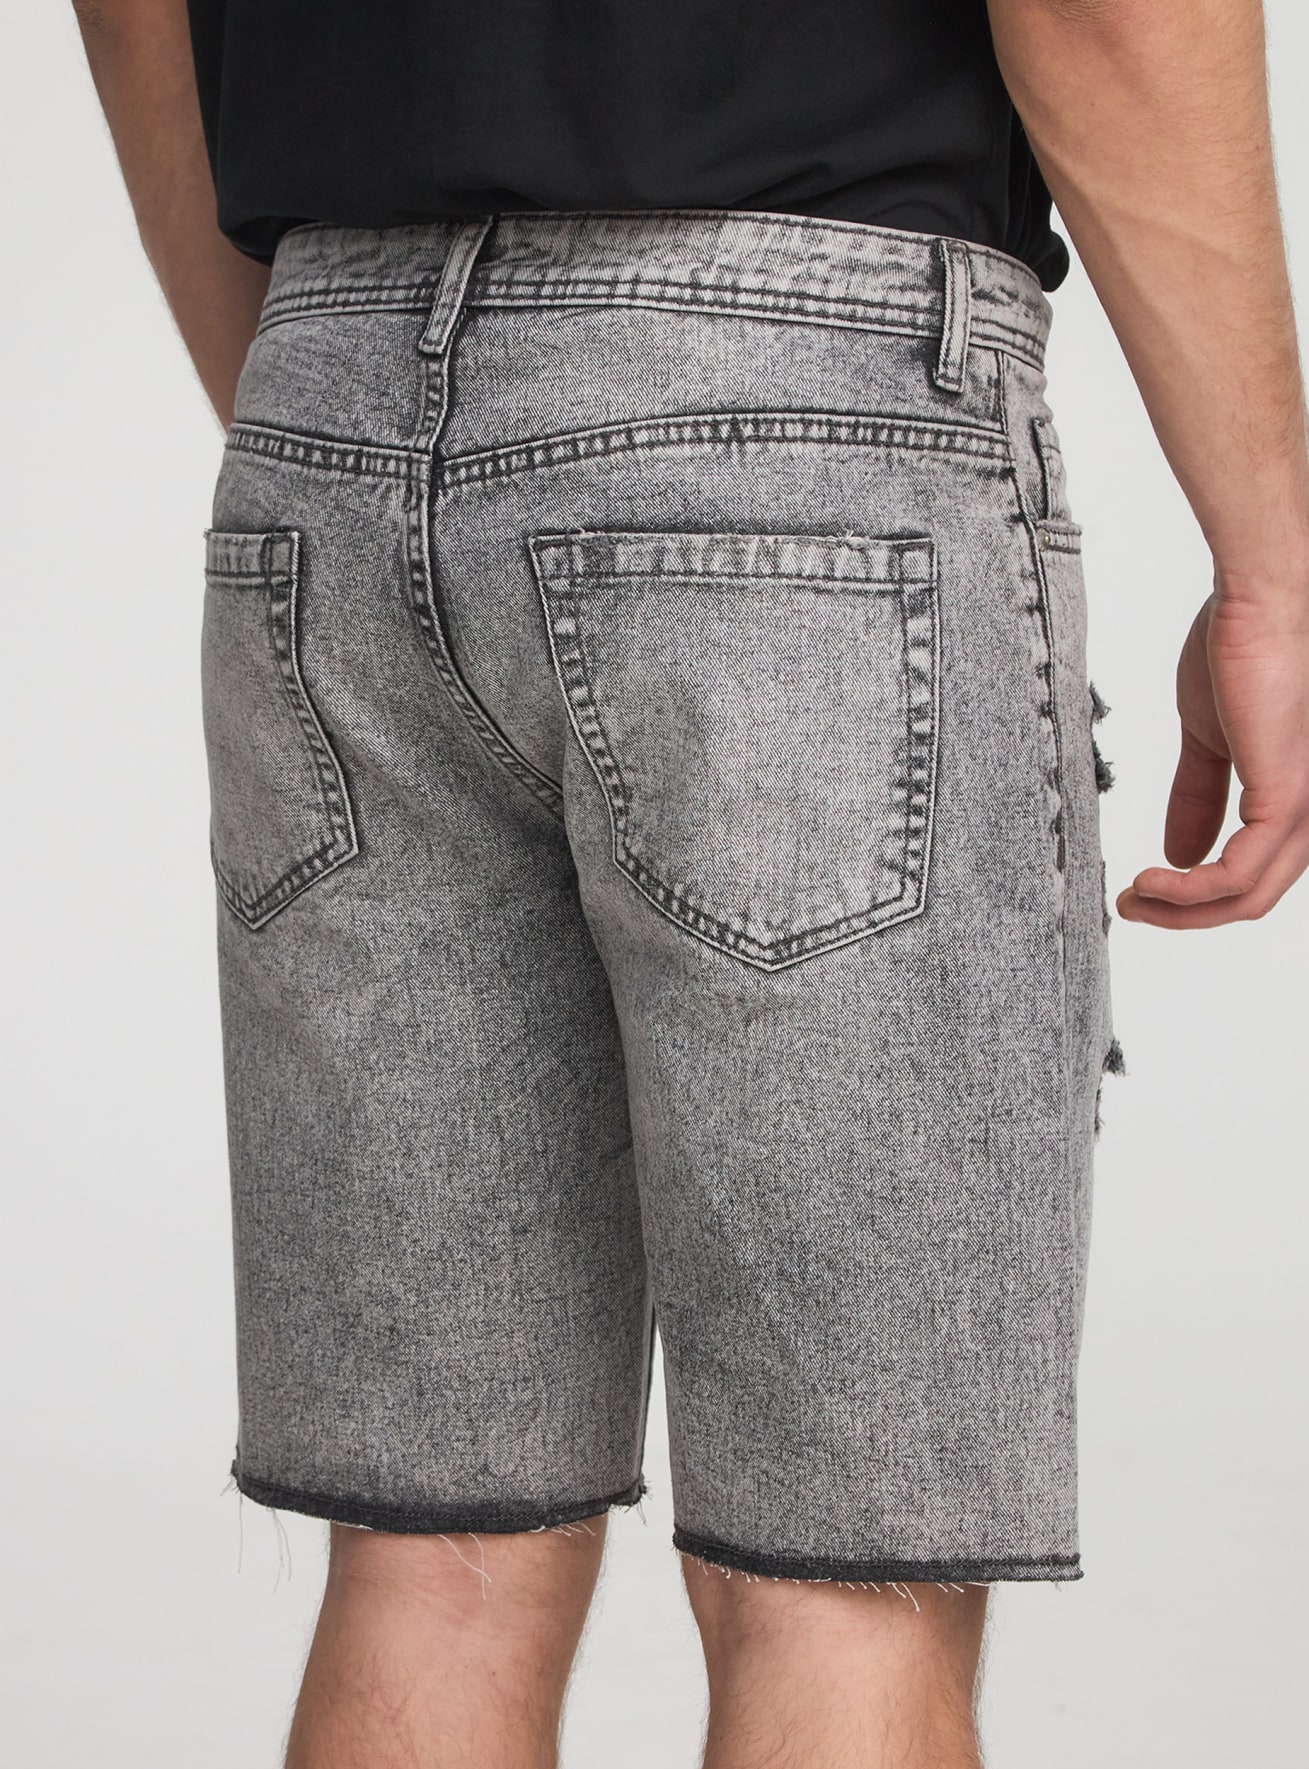 Pantalone Jeans Corto Uomo Terranova